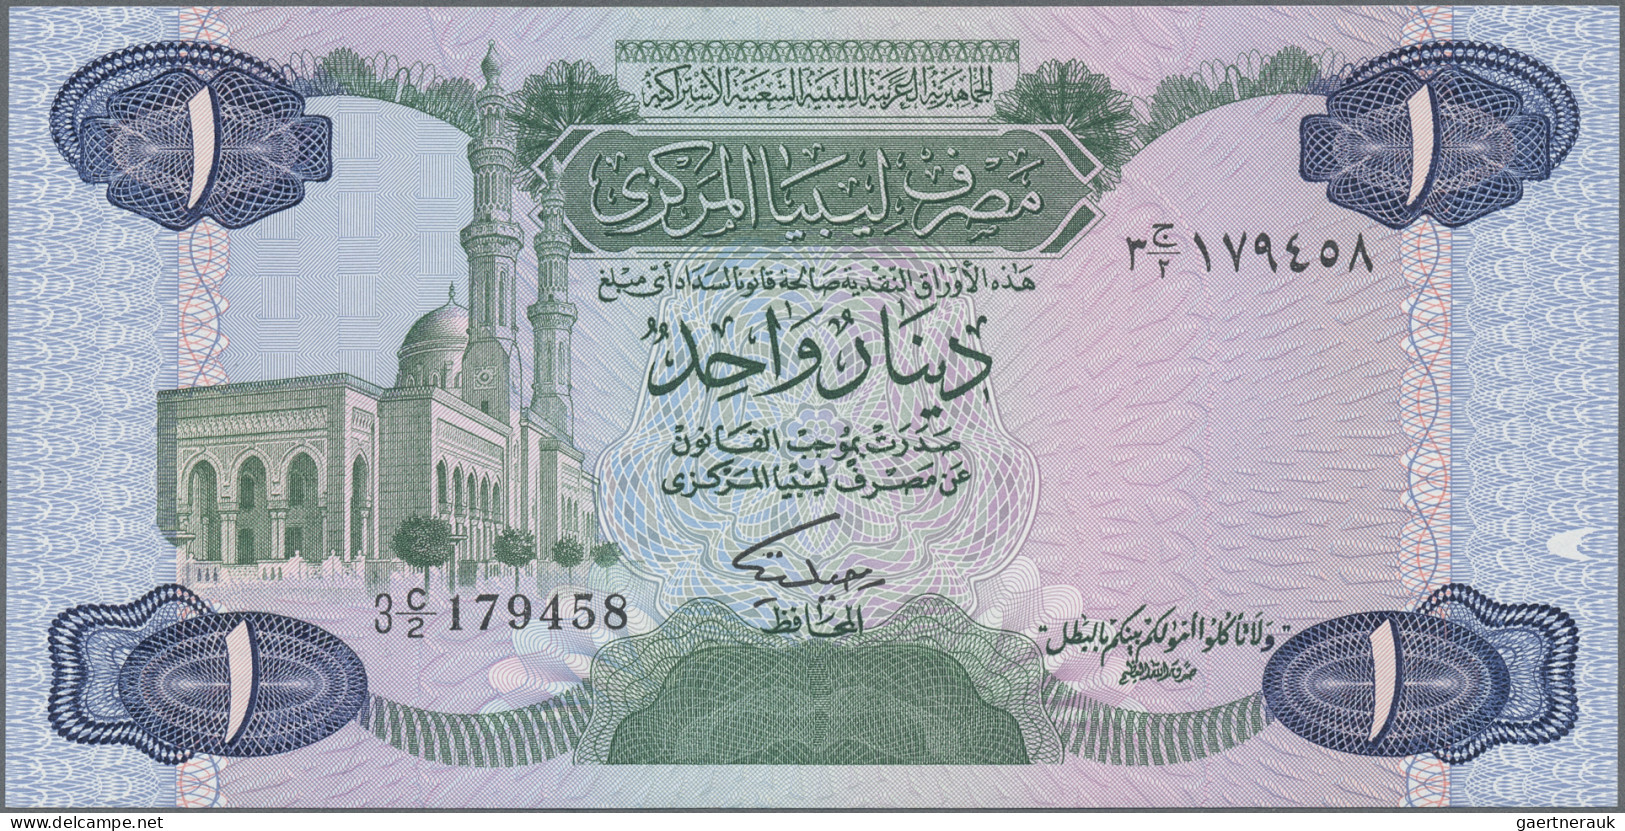 Libya: Central Bank Of Libya, Huge Lot With 34 Banknotes, Series 1981-2015, Comp - Libye